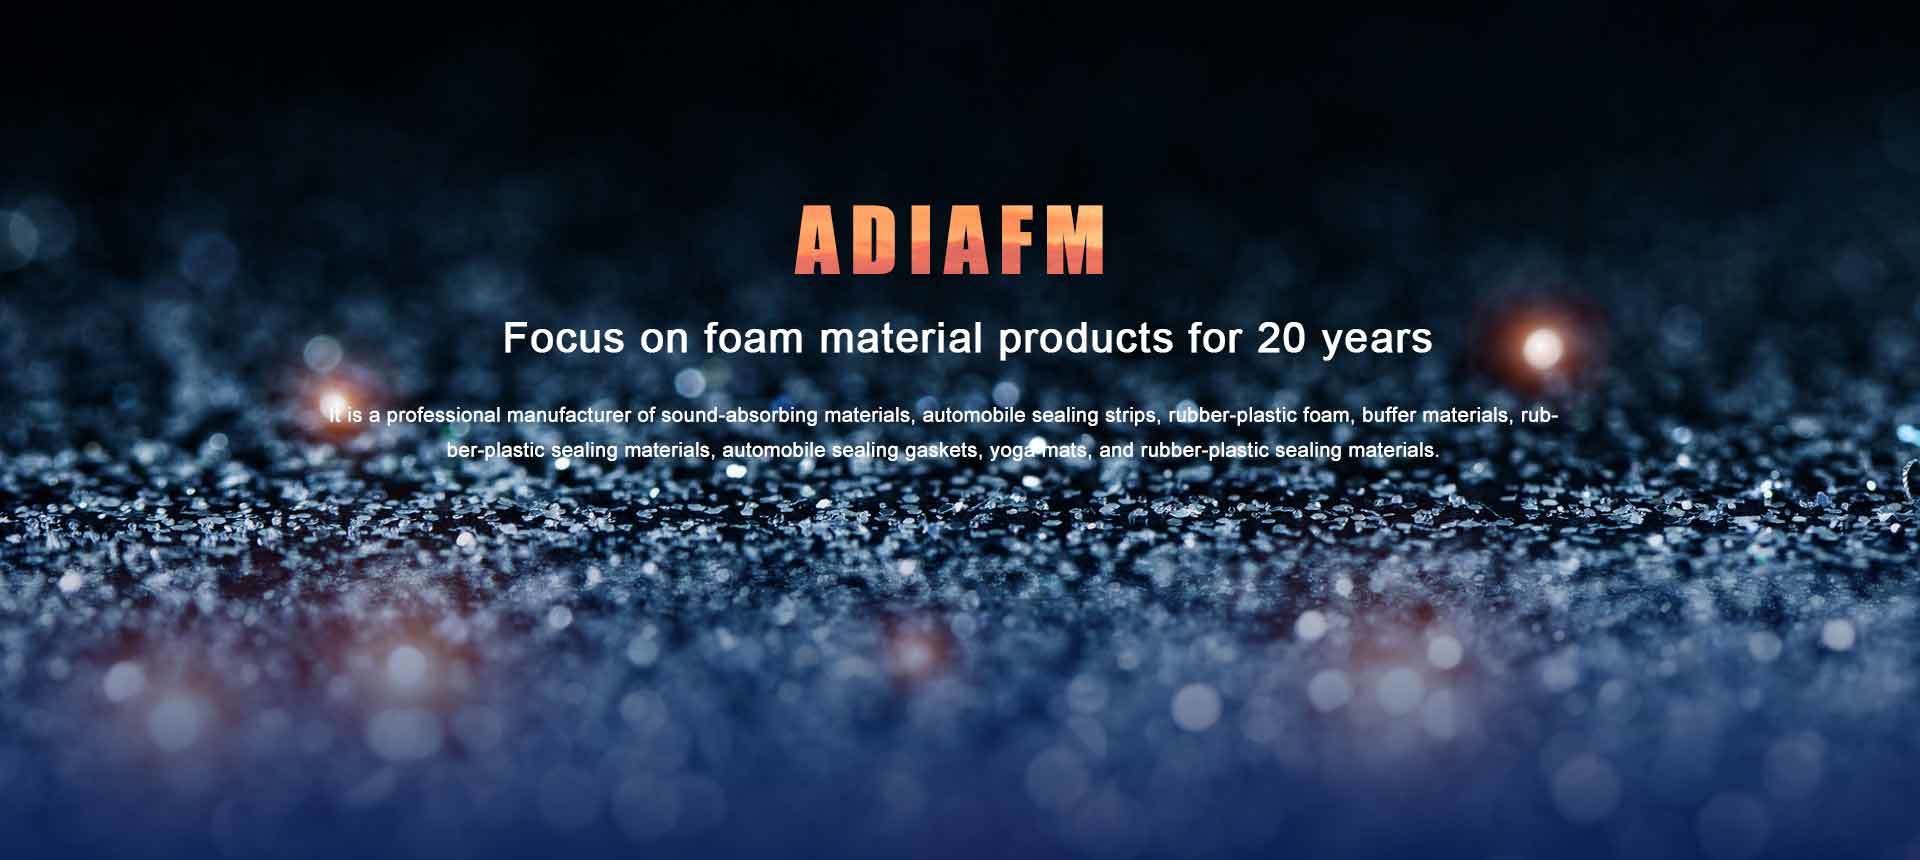 Plastic foam material supplier